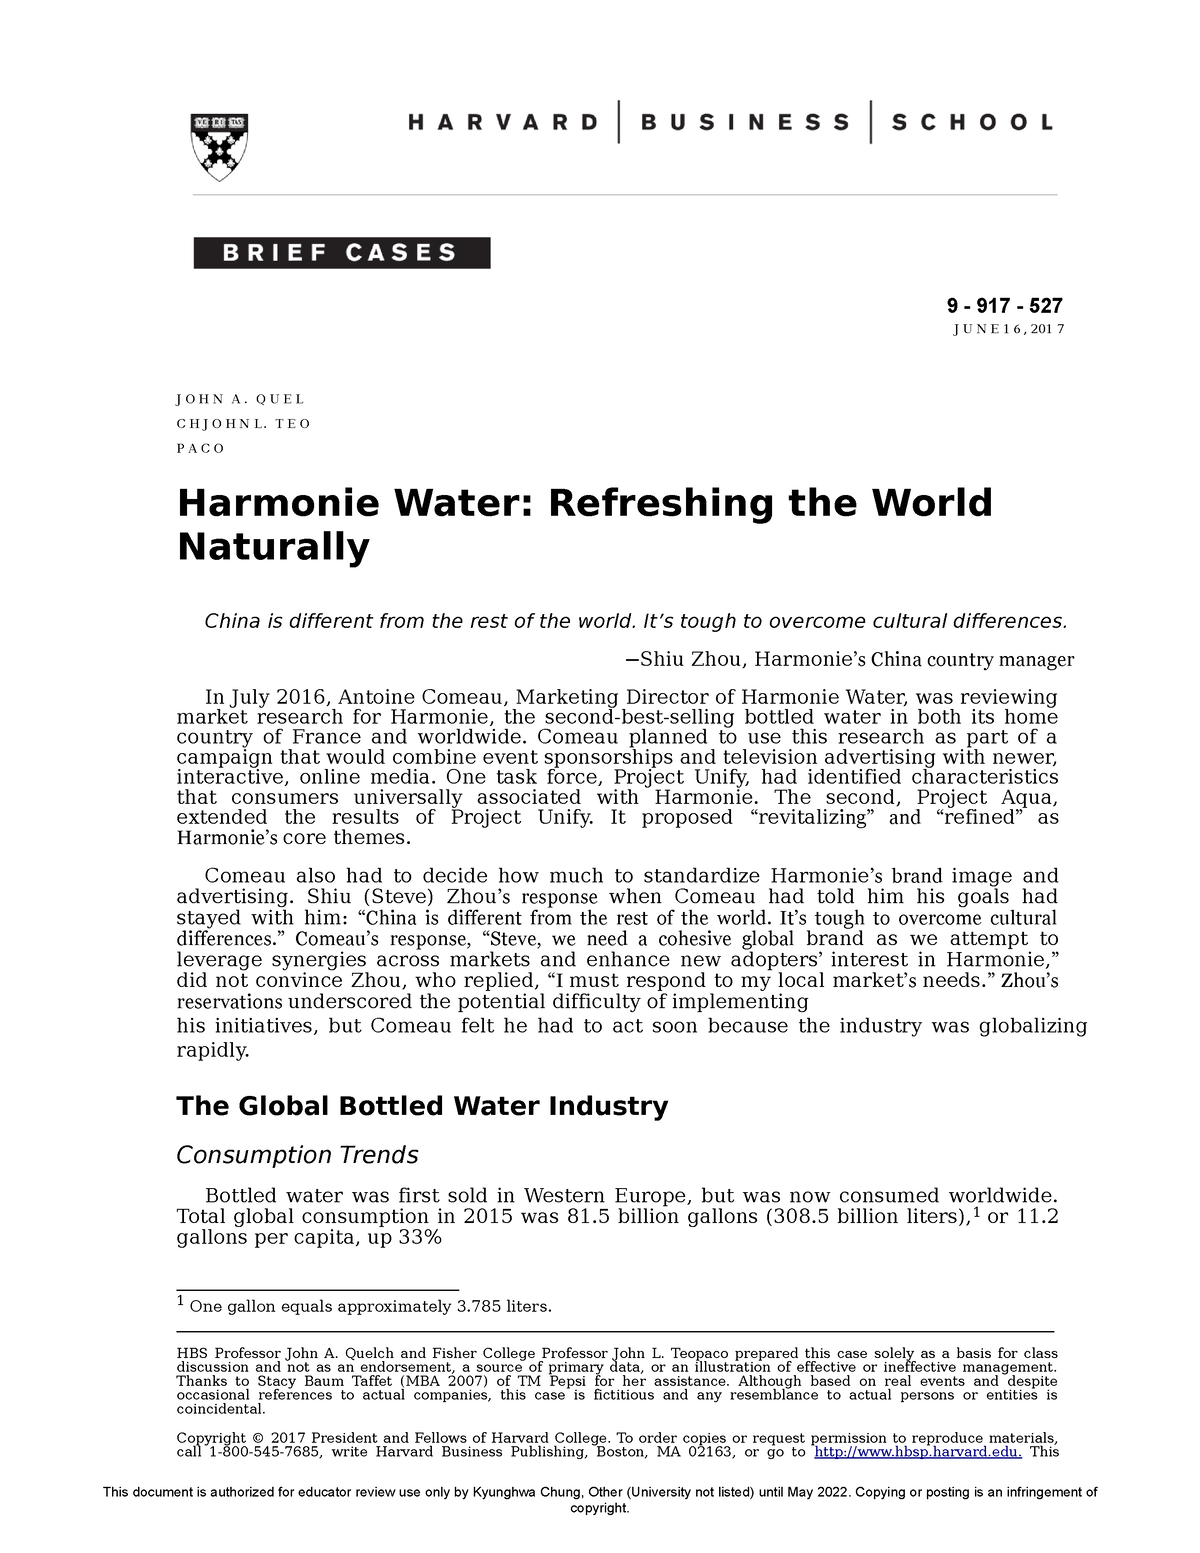 harmonie water case study swot analysis